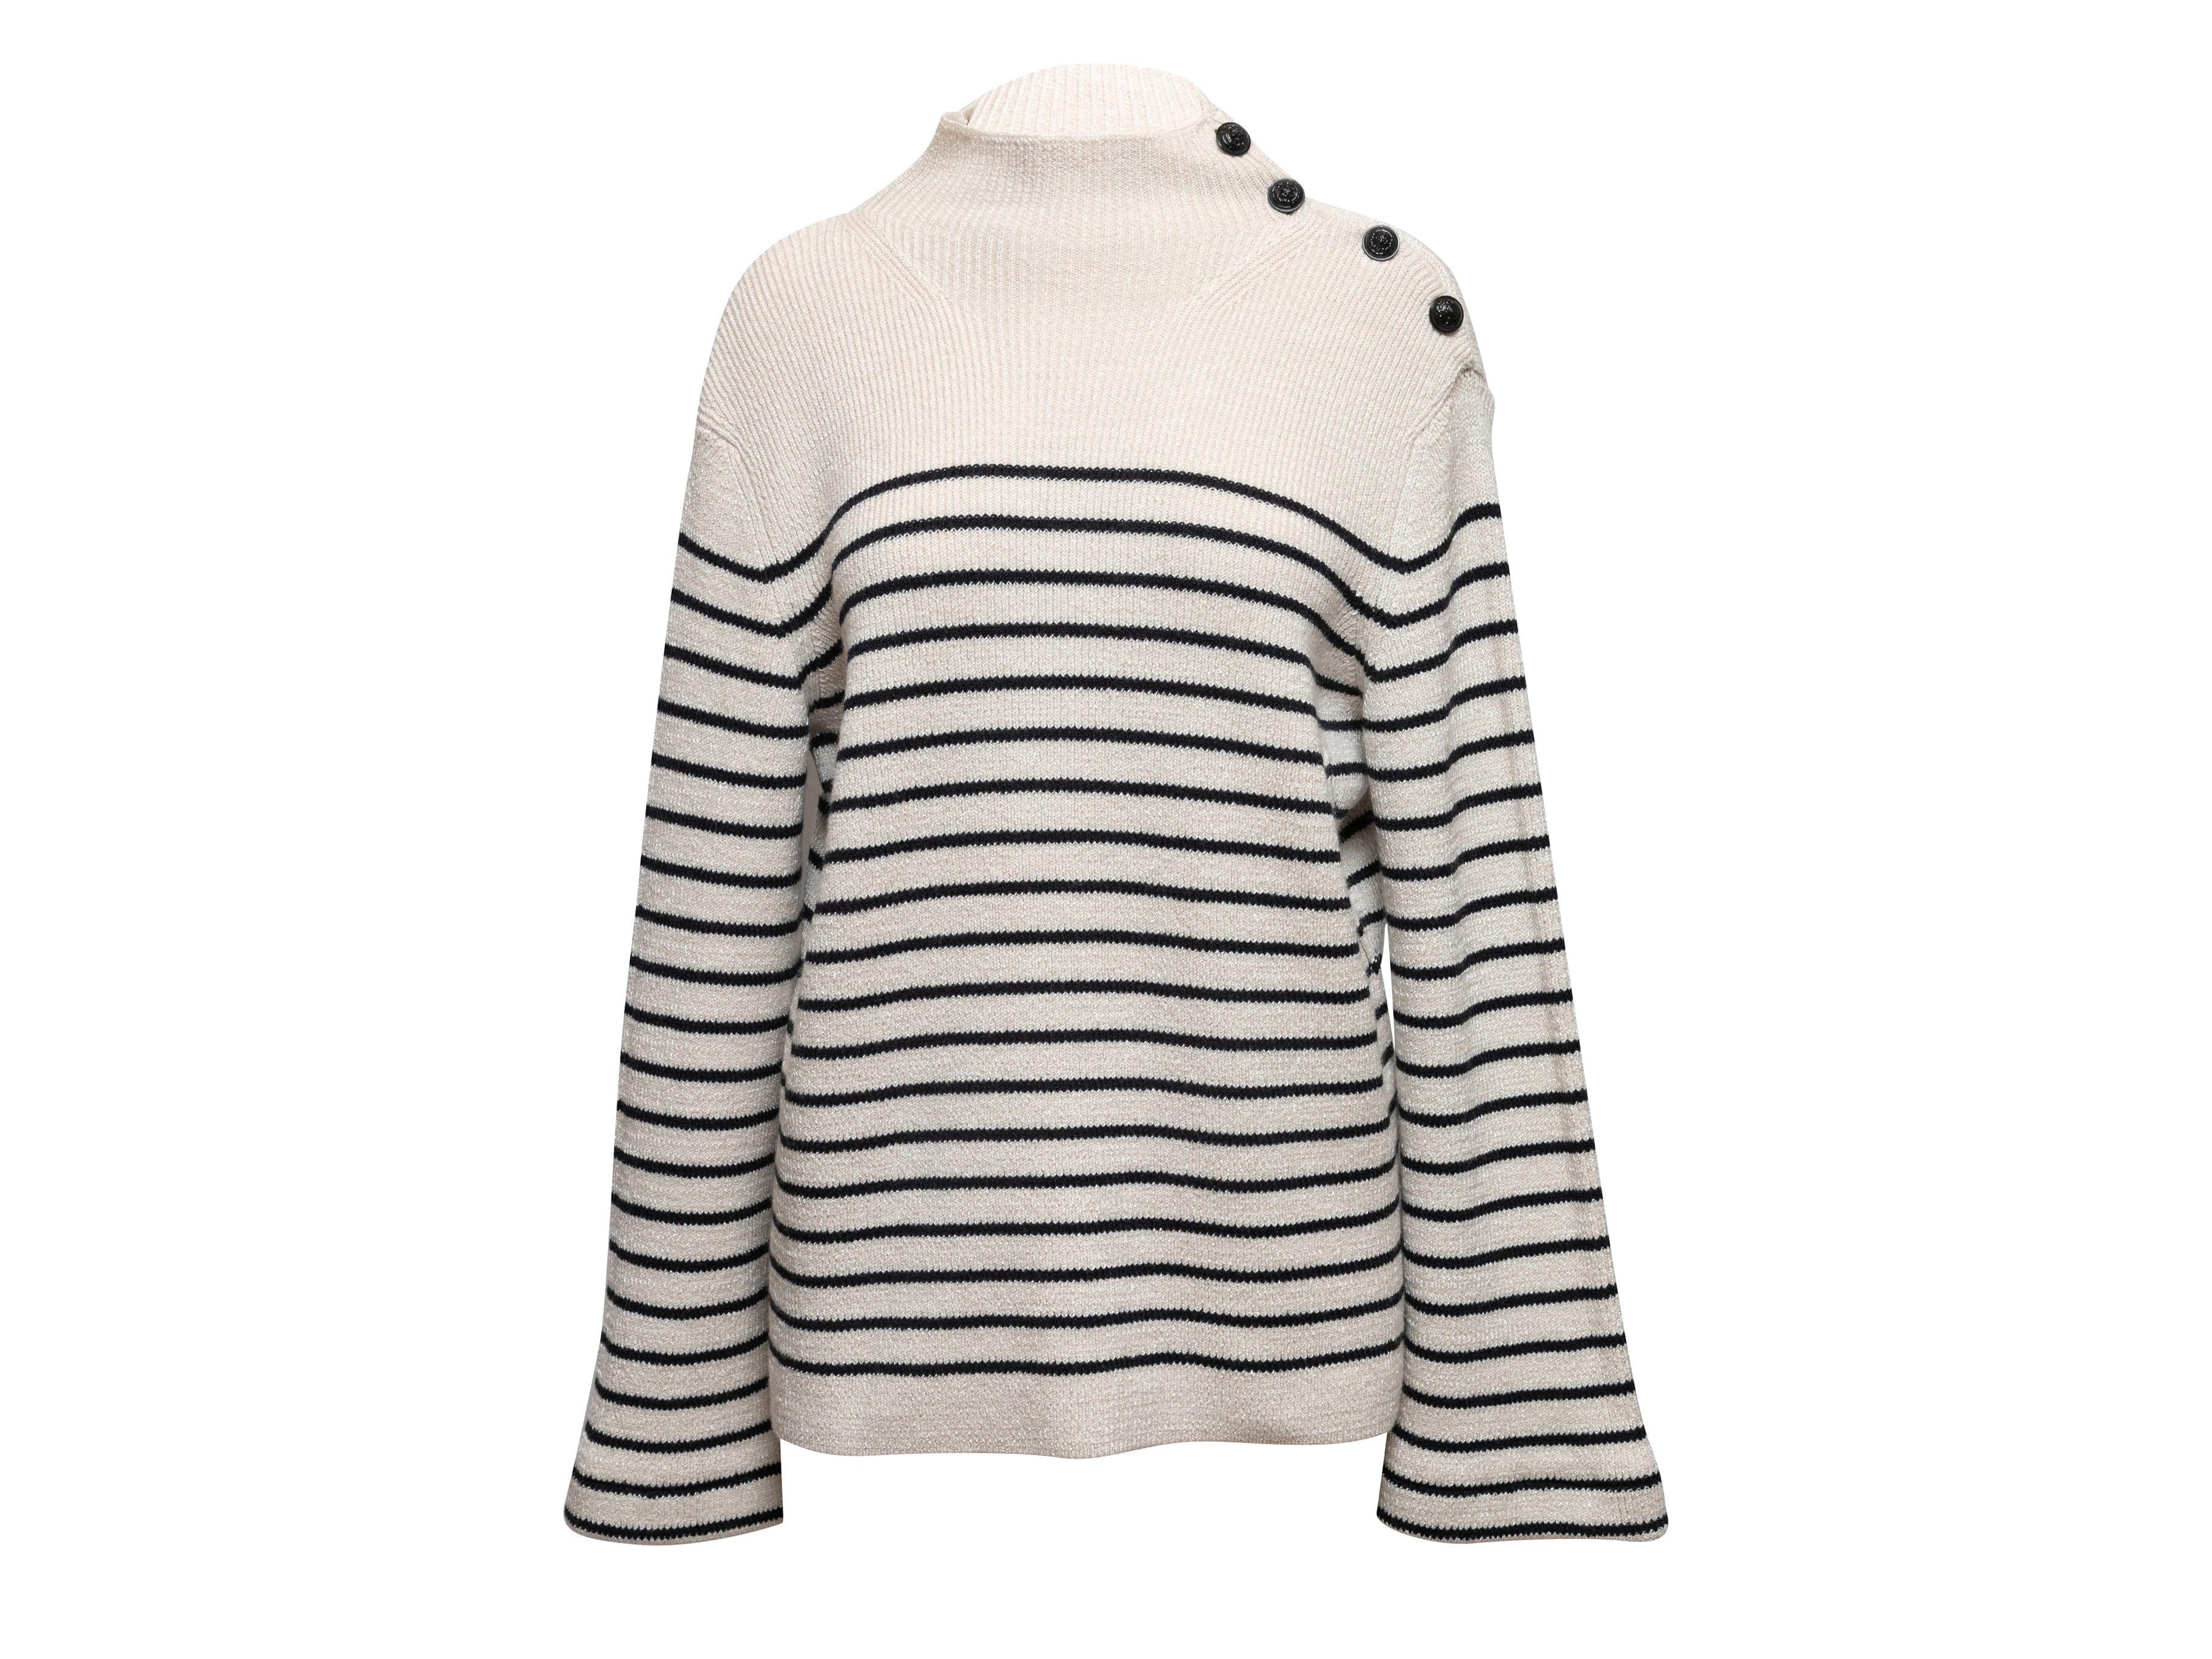 Louis Vuitton - Authenticated Sweatshirt - Wool White Plain for Men, Good Condition